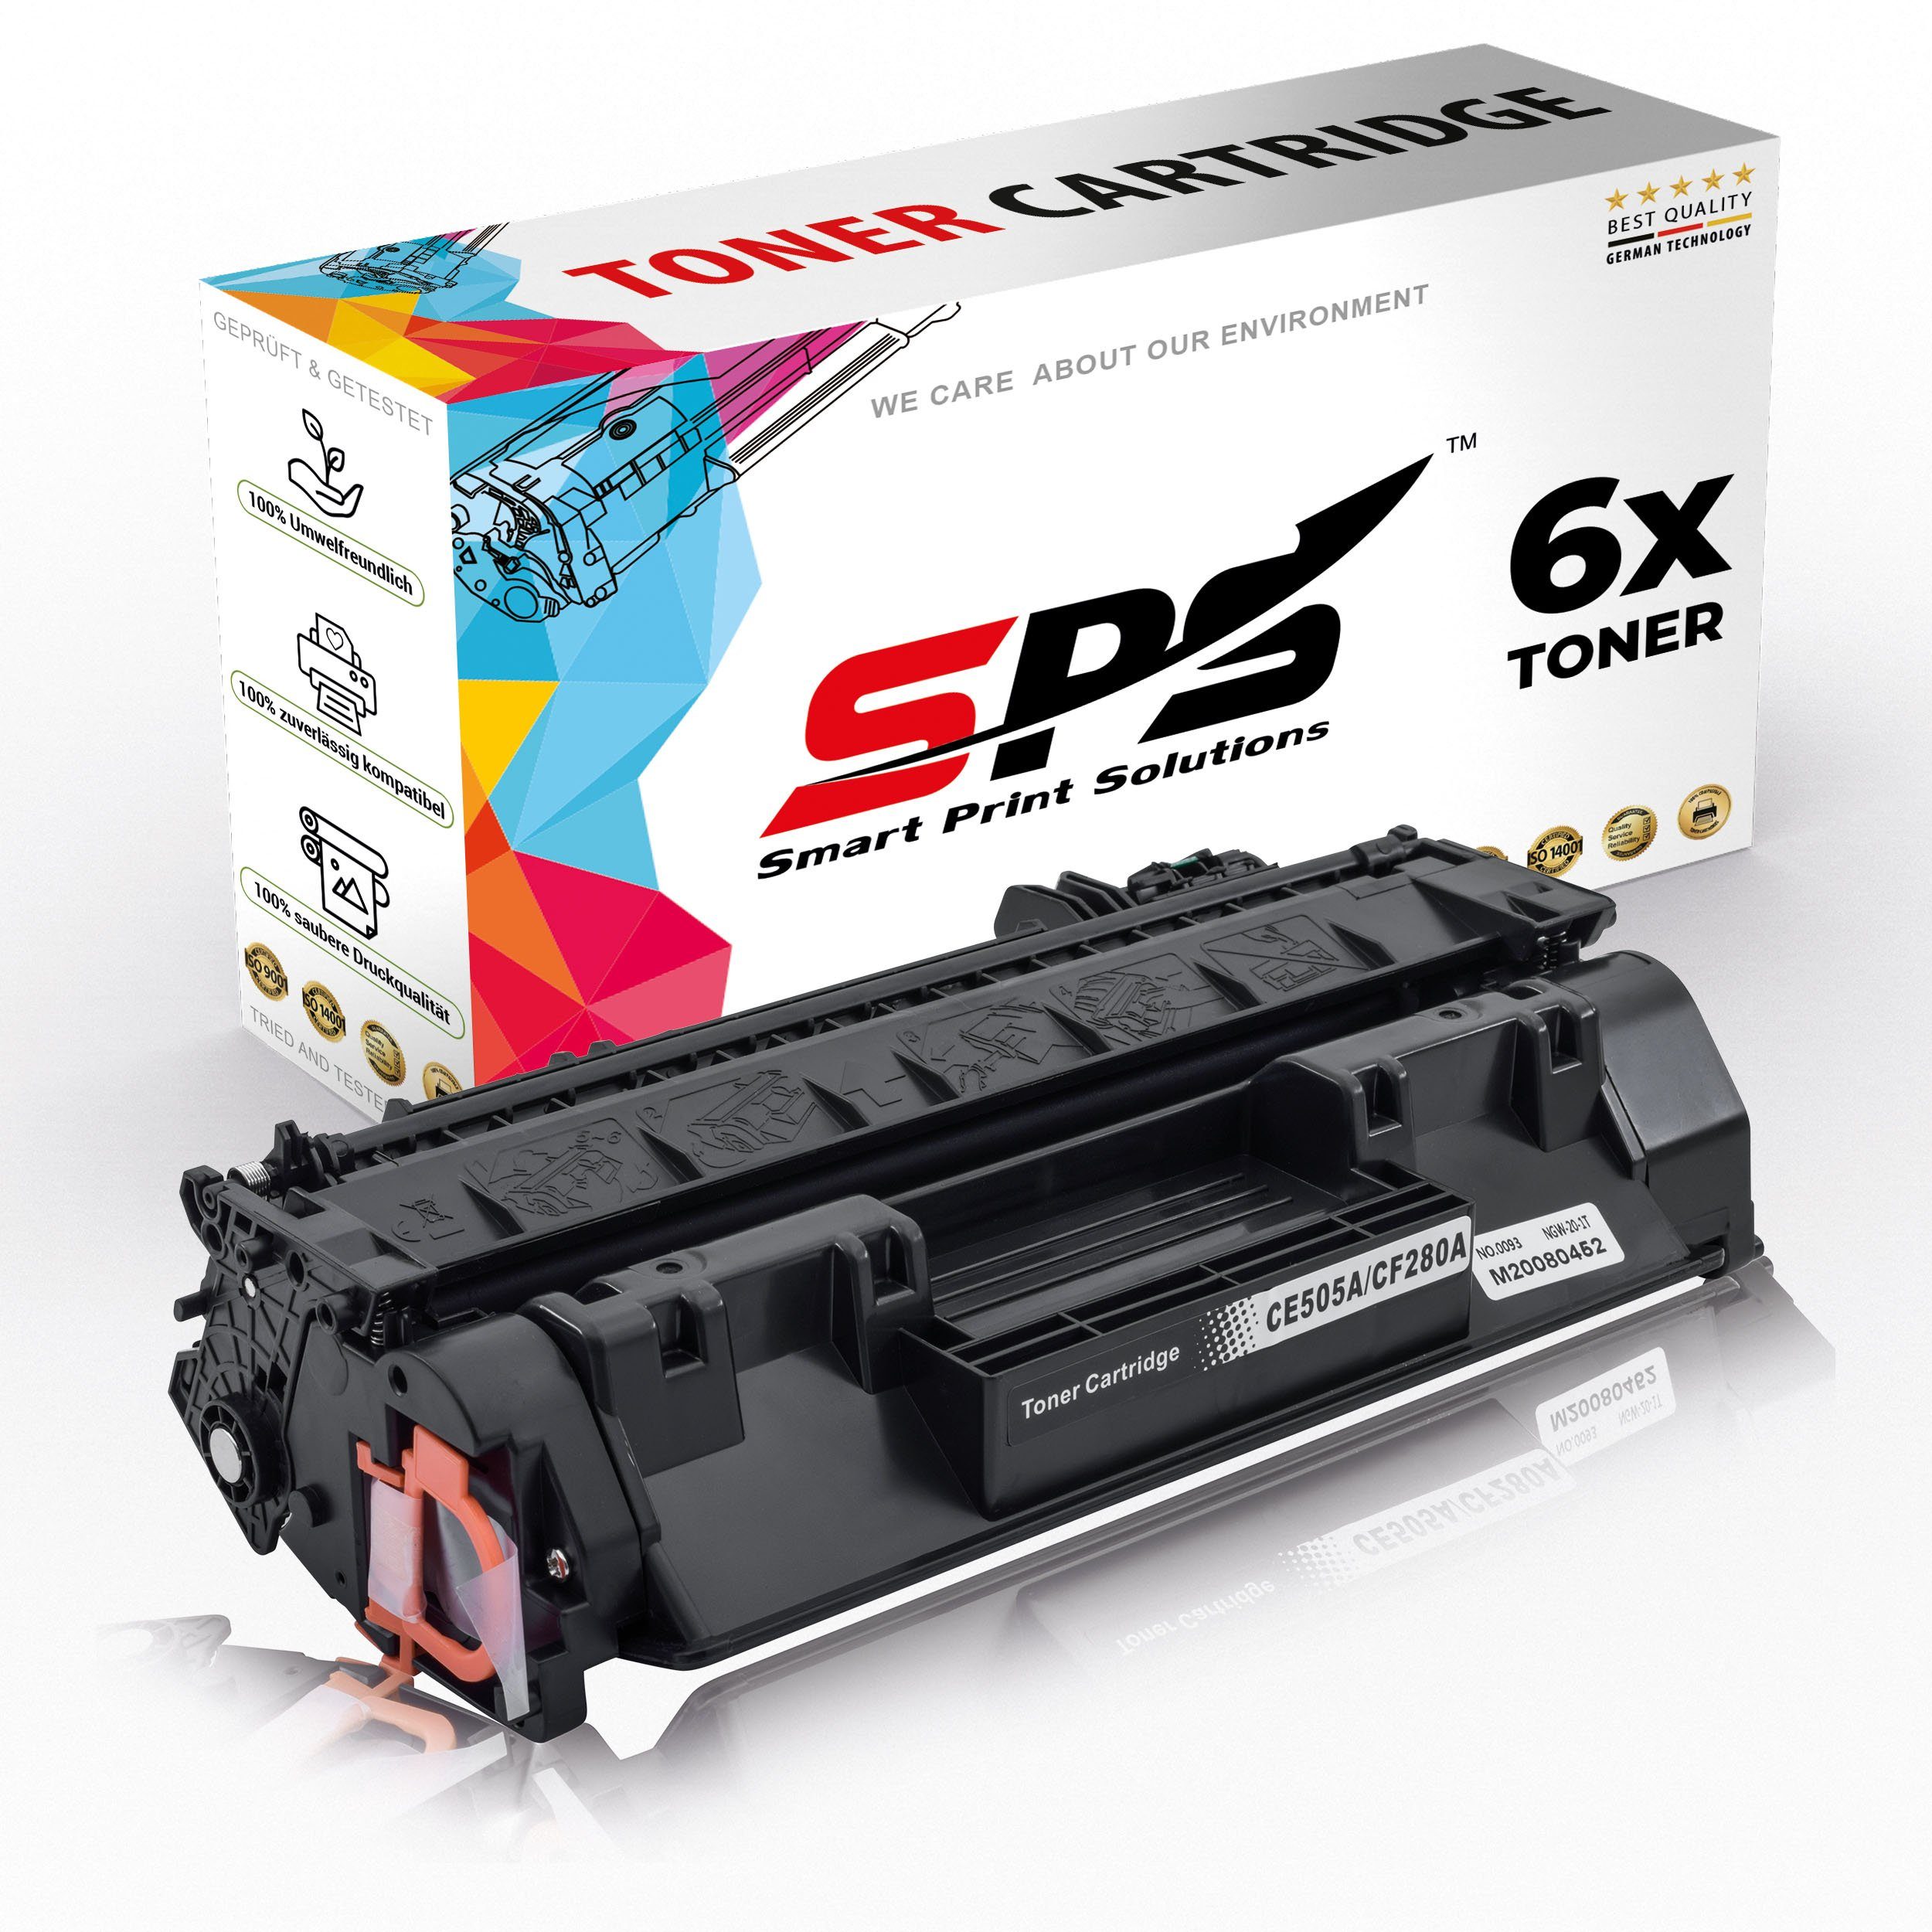 SPS Tonerkartusche Kompatibel für HP Laserjet Pro 400 M401DN 80A, (6er Pack) | Tonerpatronen